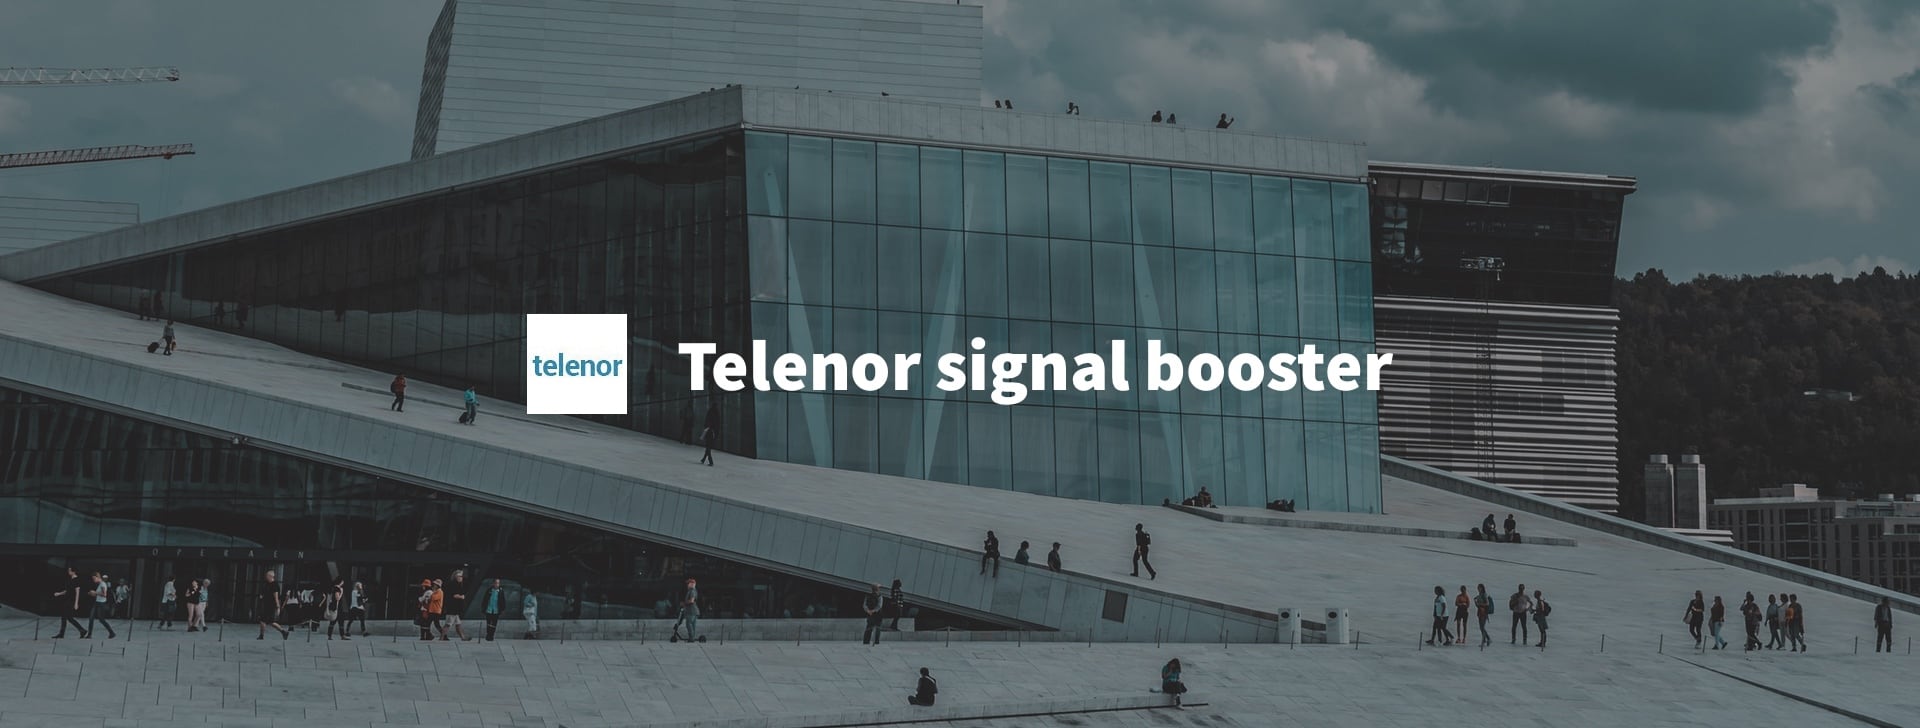 Telenor mobile signal